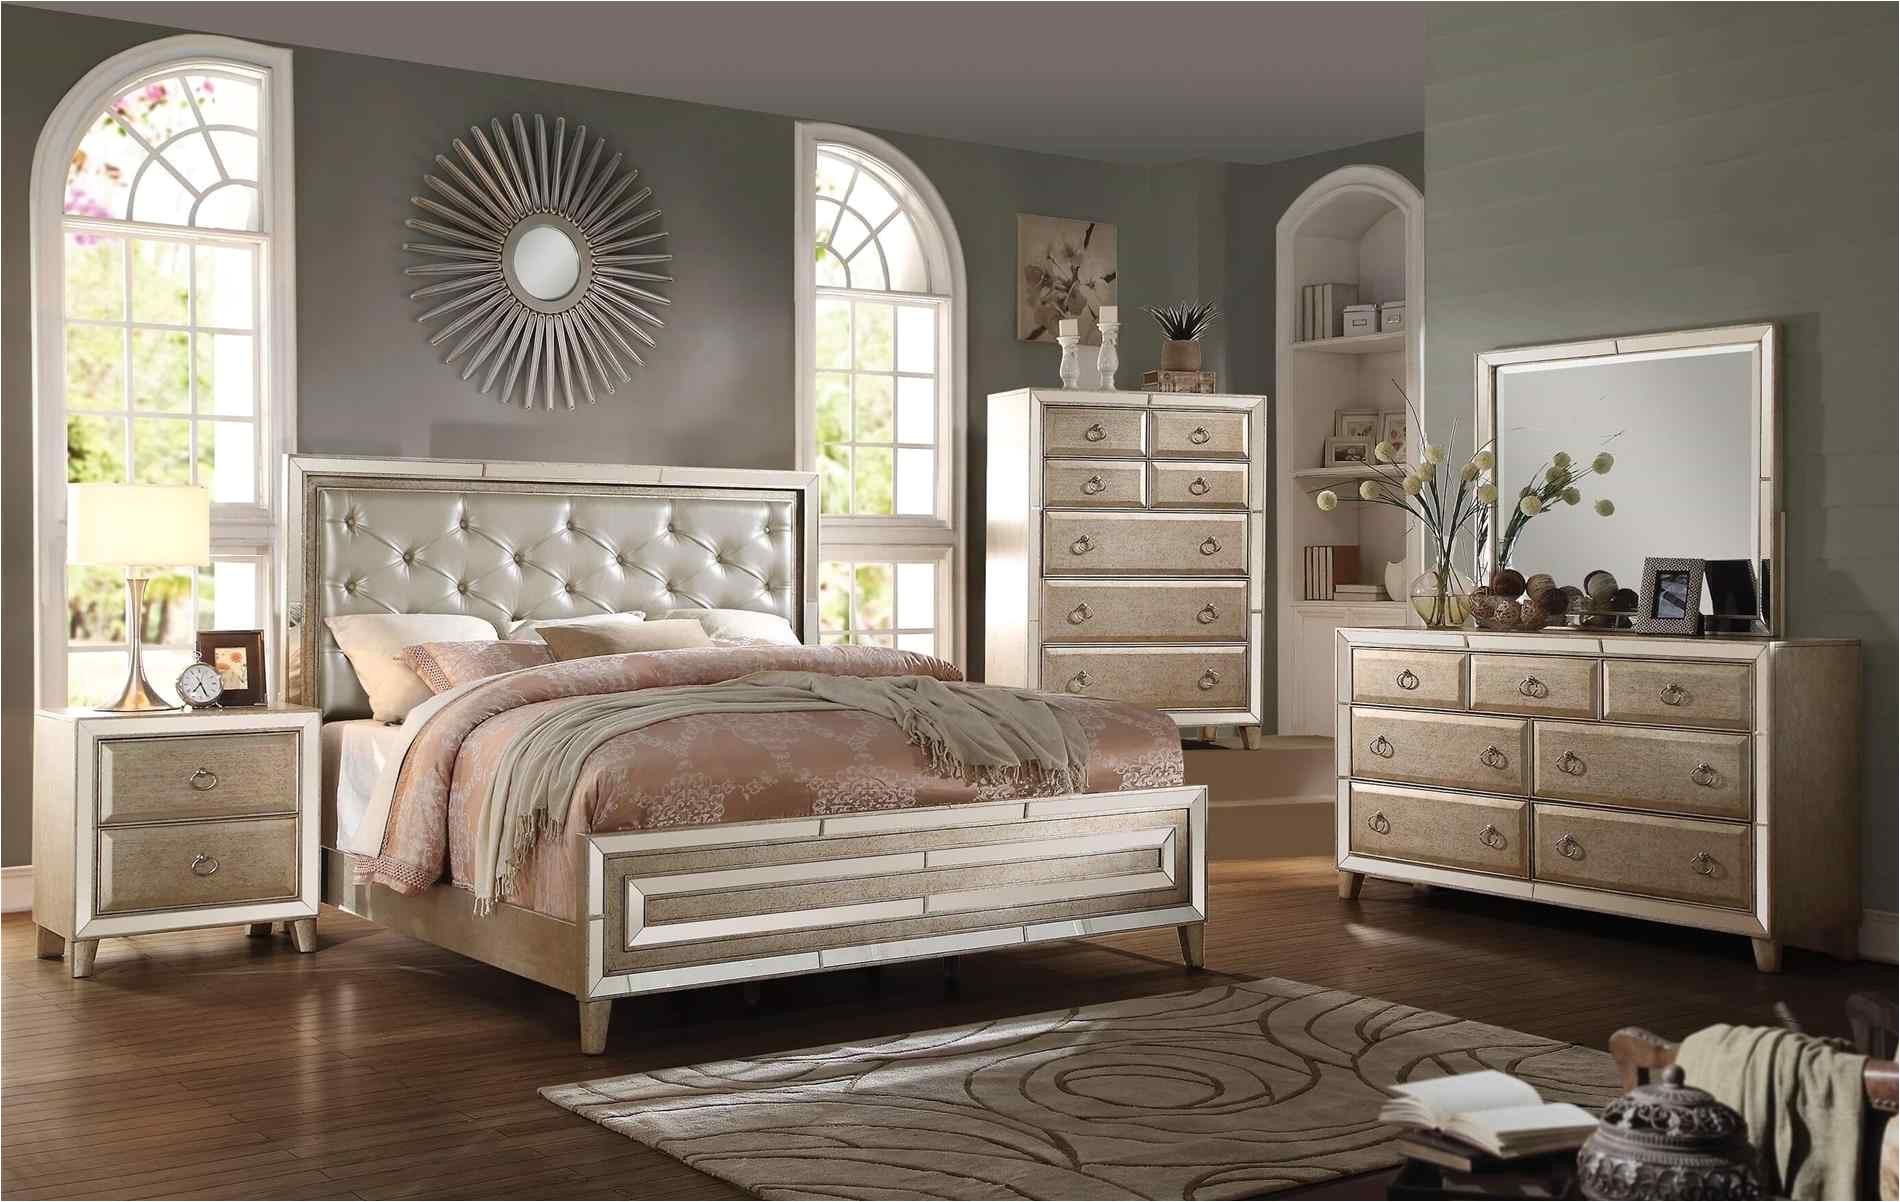 full size of home designs sofia vergara bedroom set luxury sofia vergara bedroom furniture sofia